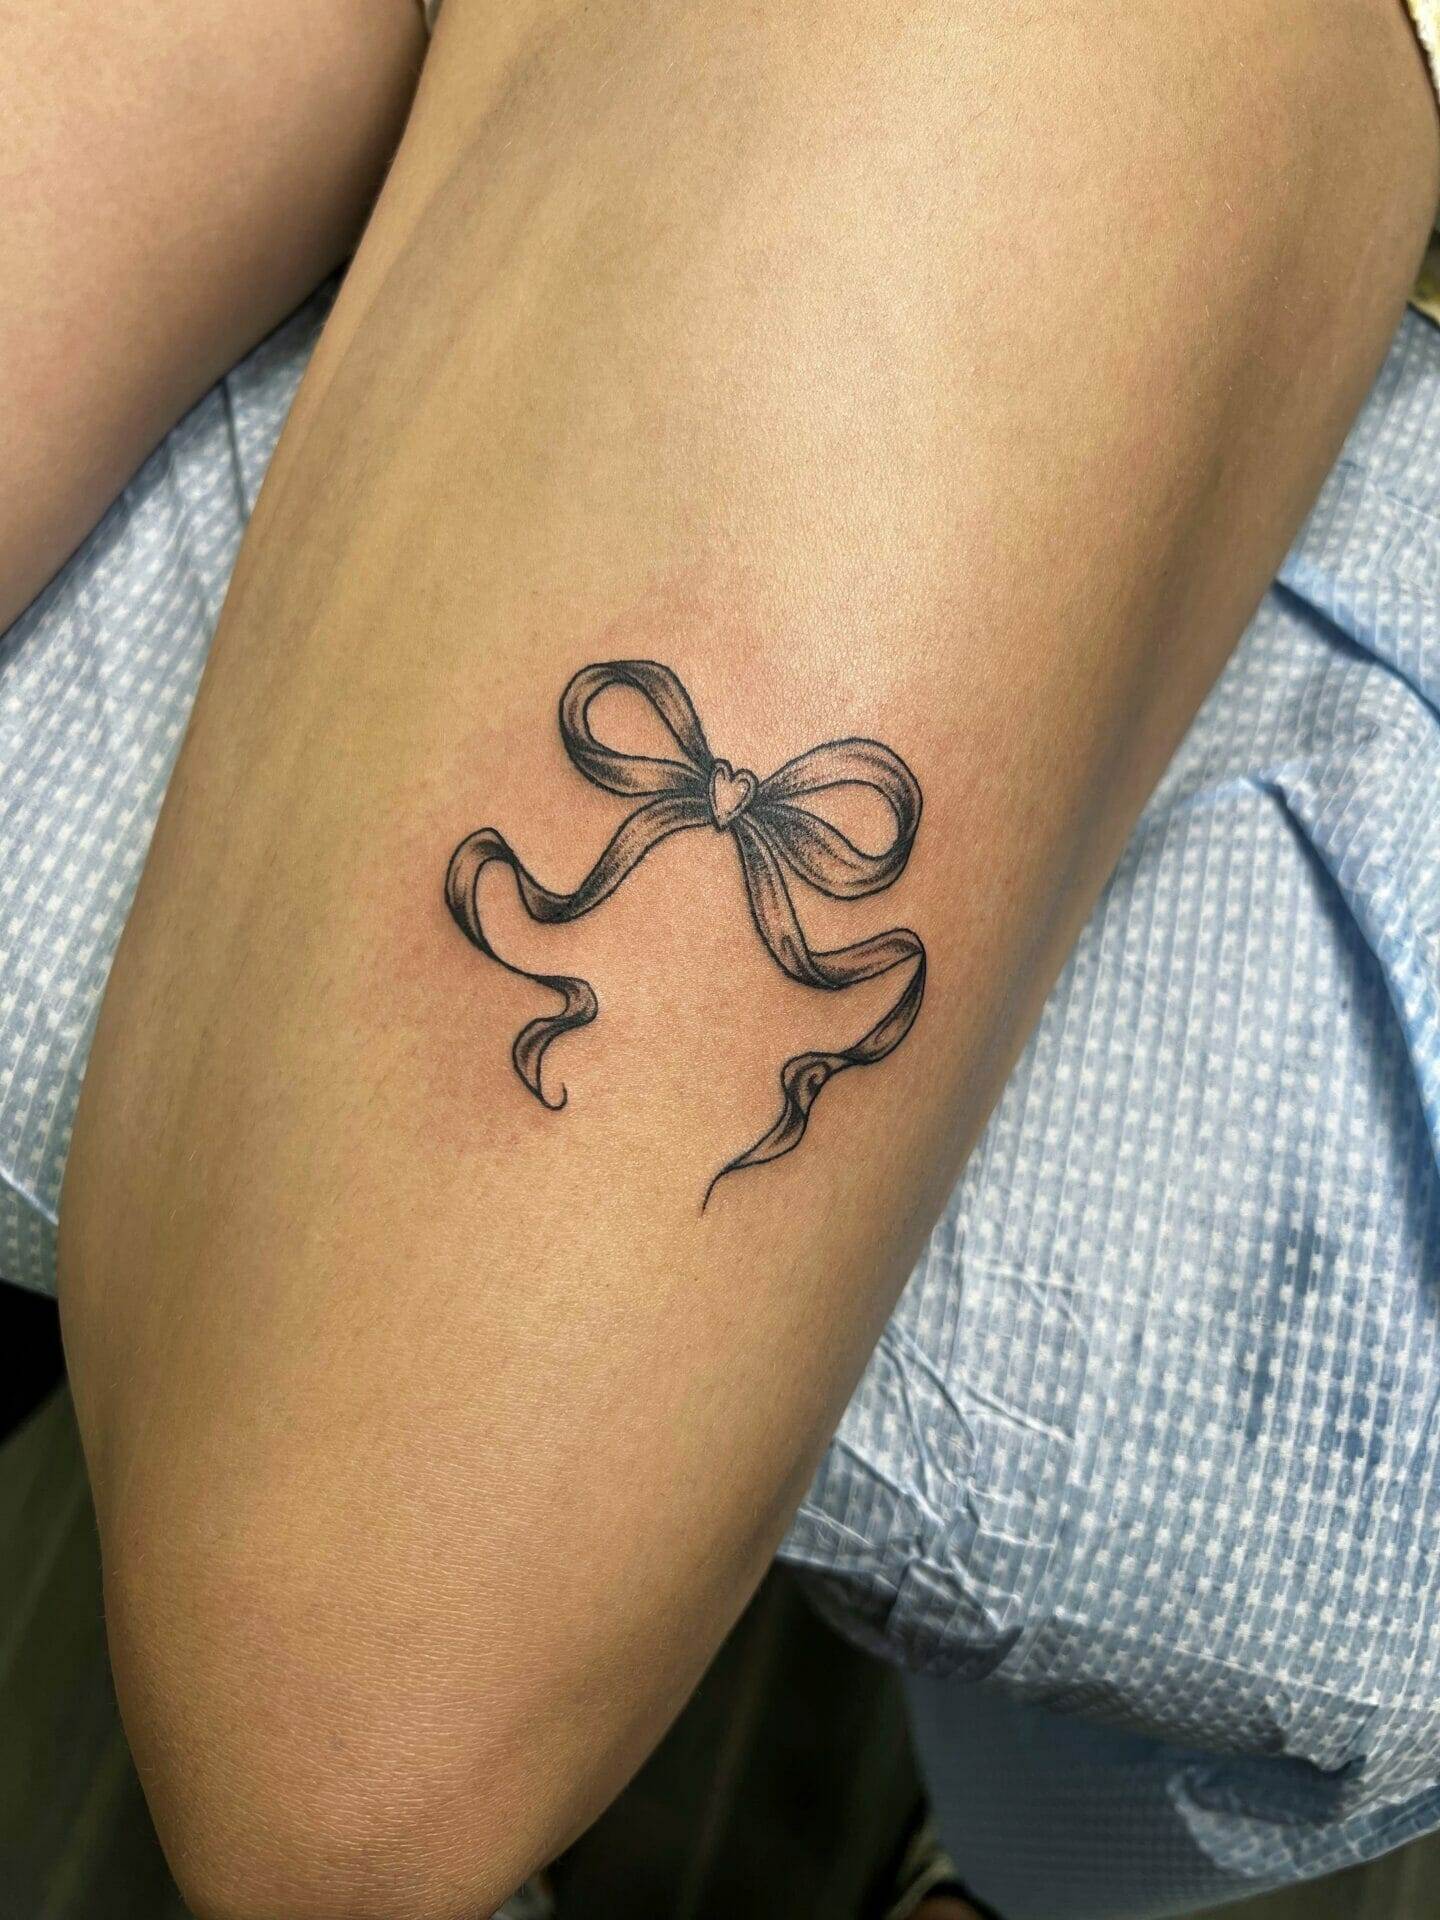 Temporary tattoo offers needle-free way to mo | EurekAlert!